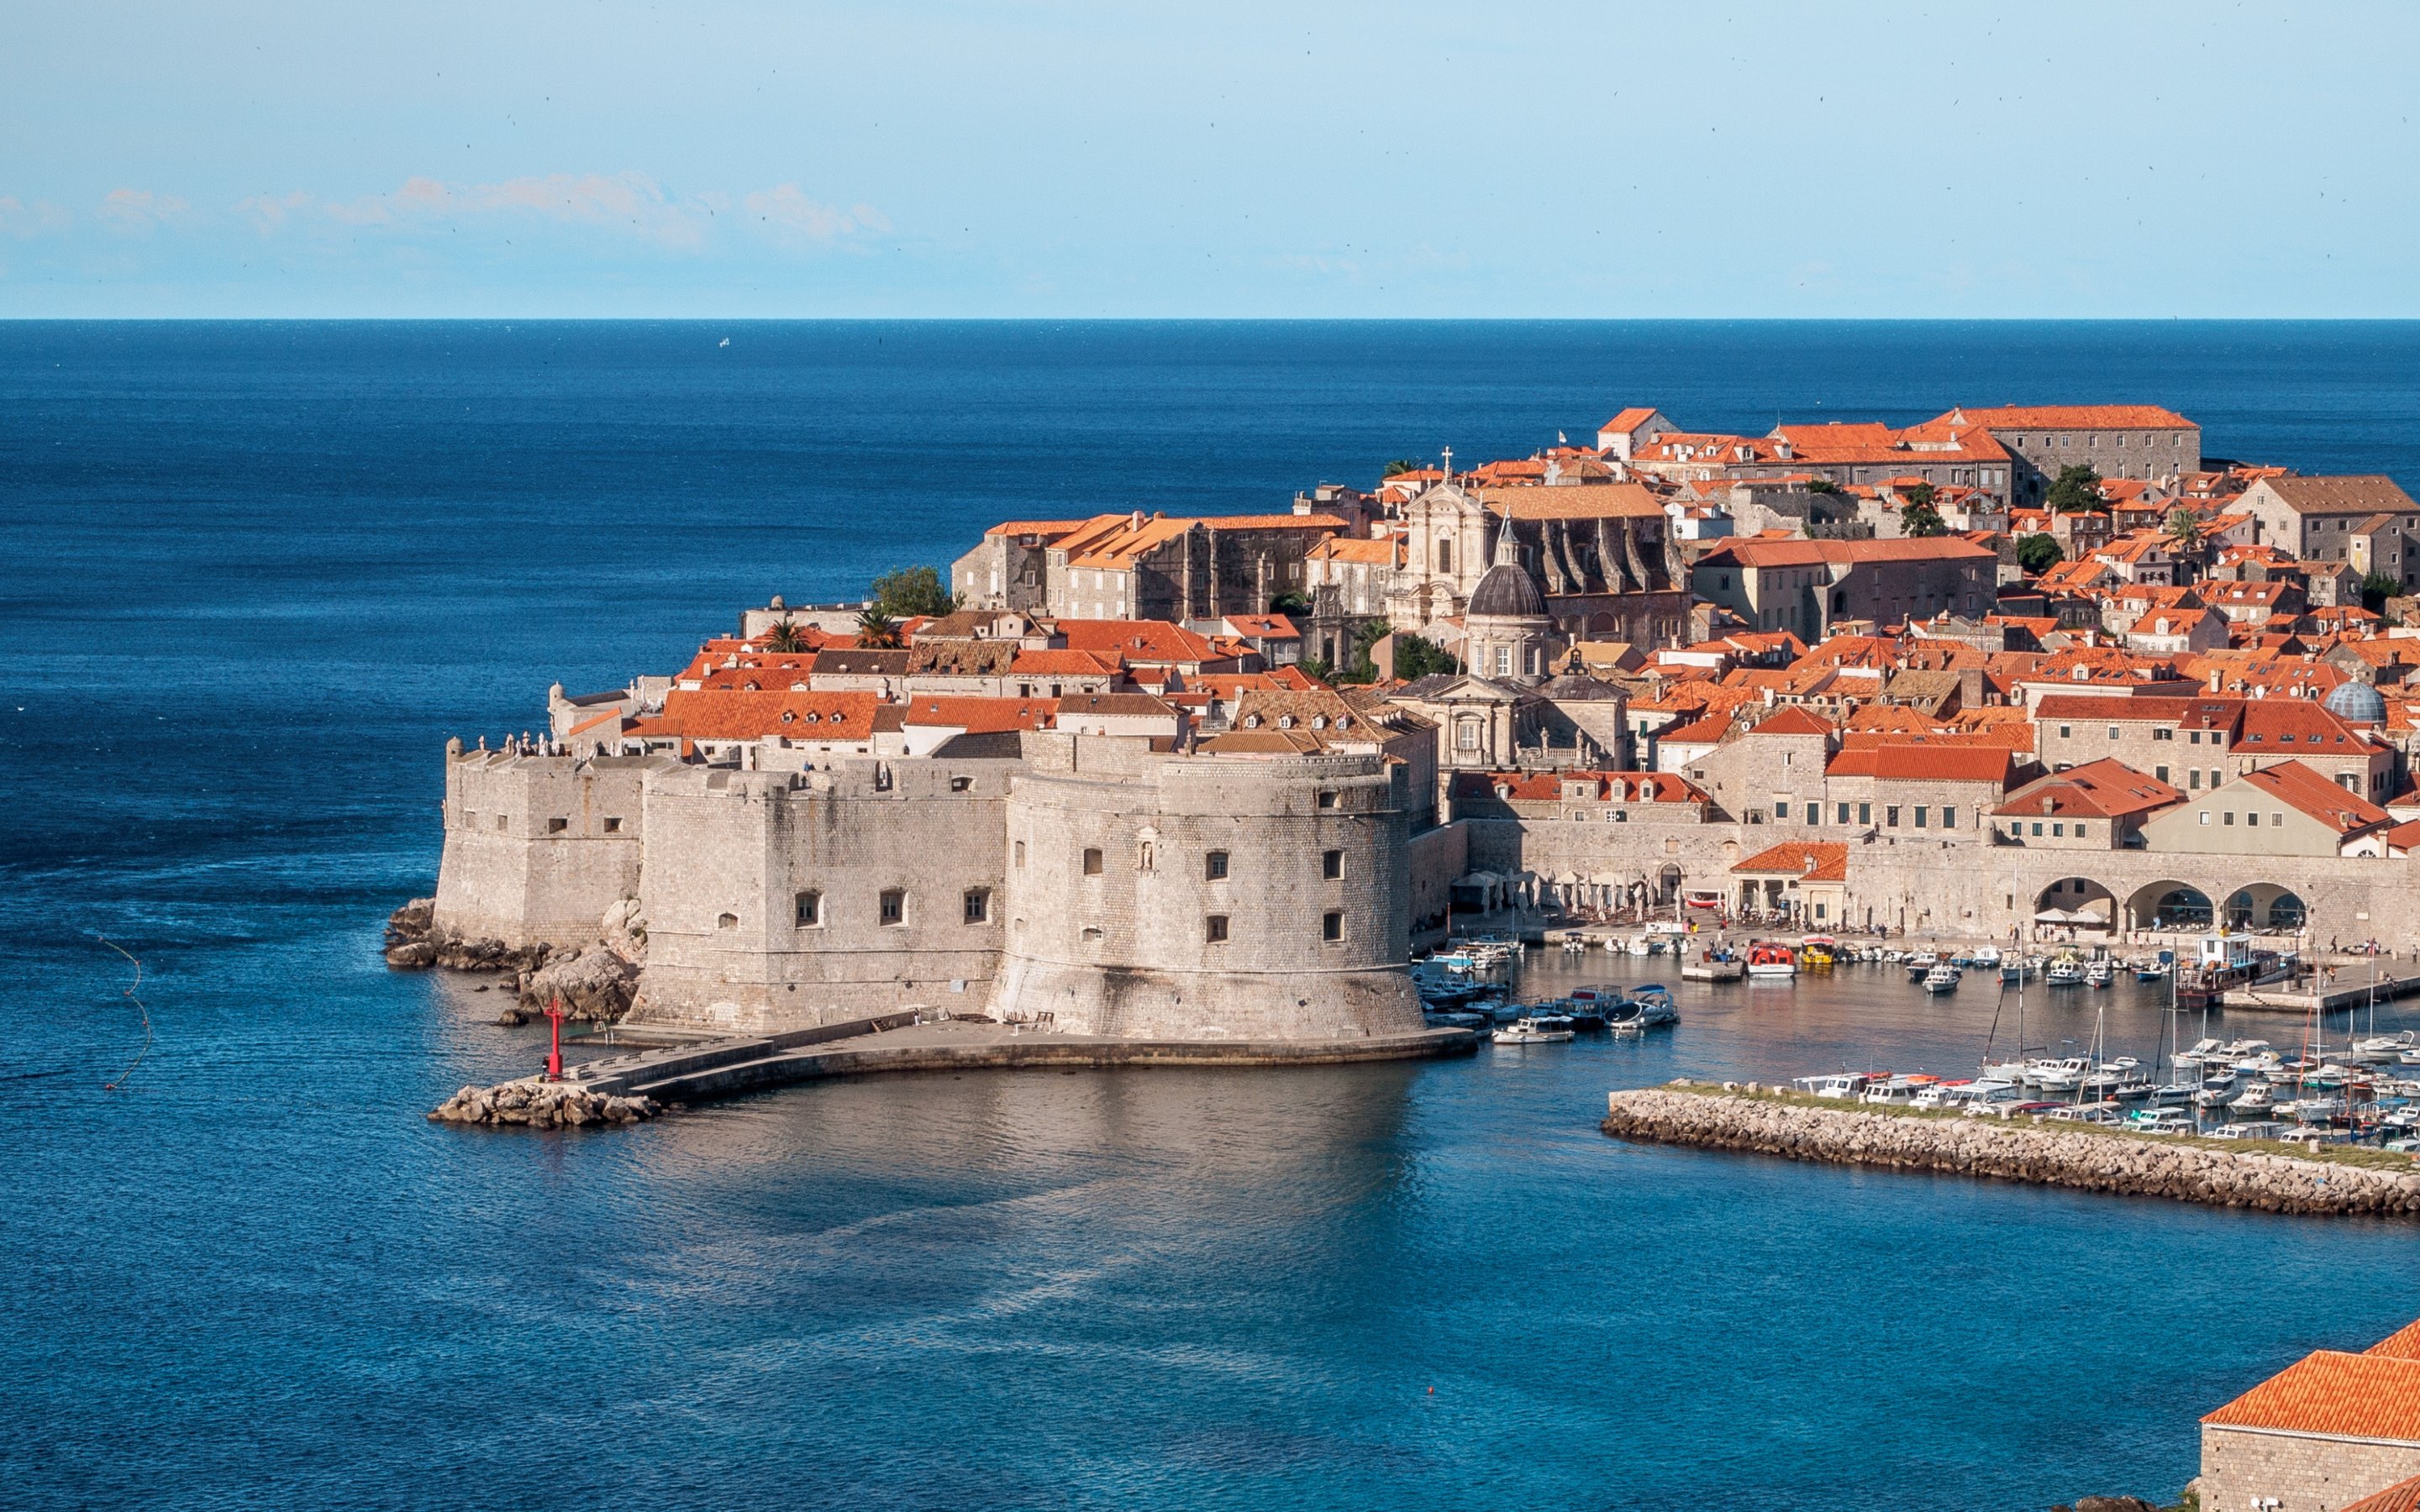 Europe. Croatia. Town. Dubrovnik HD Wallpapers. 4K Wallpapers